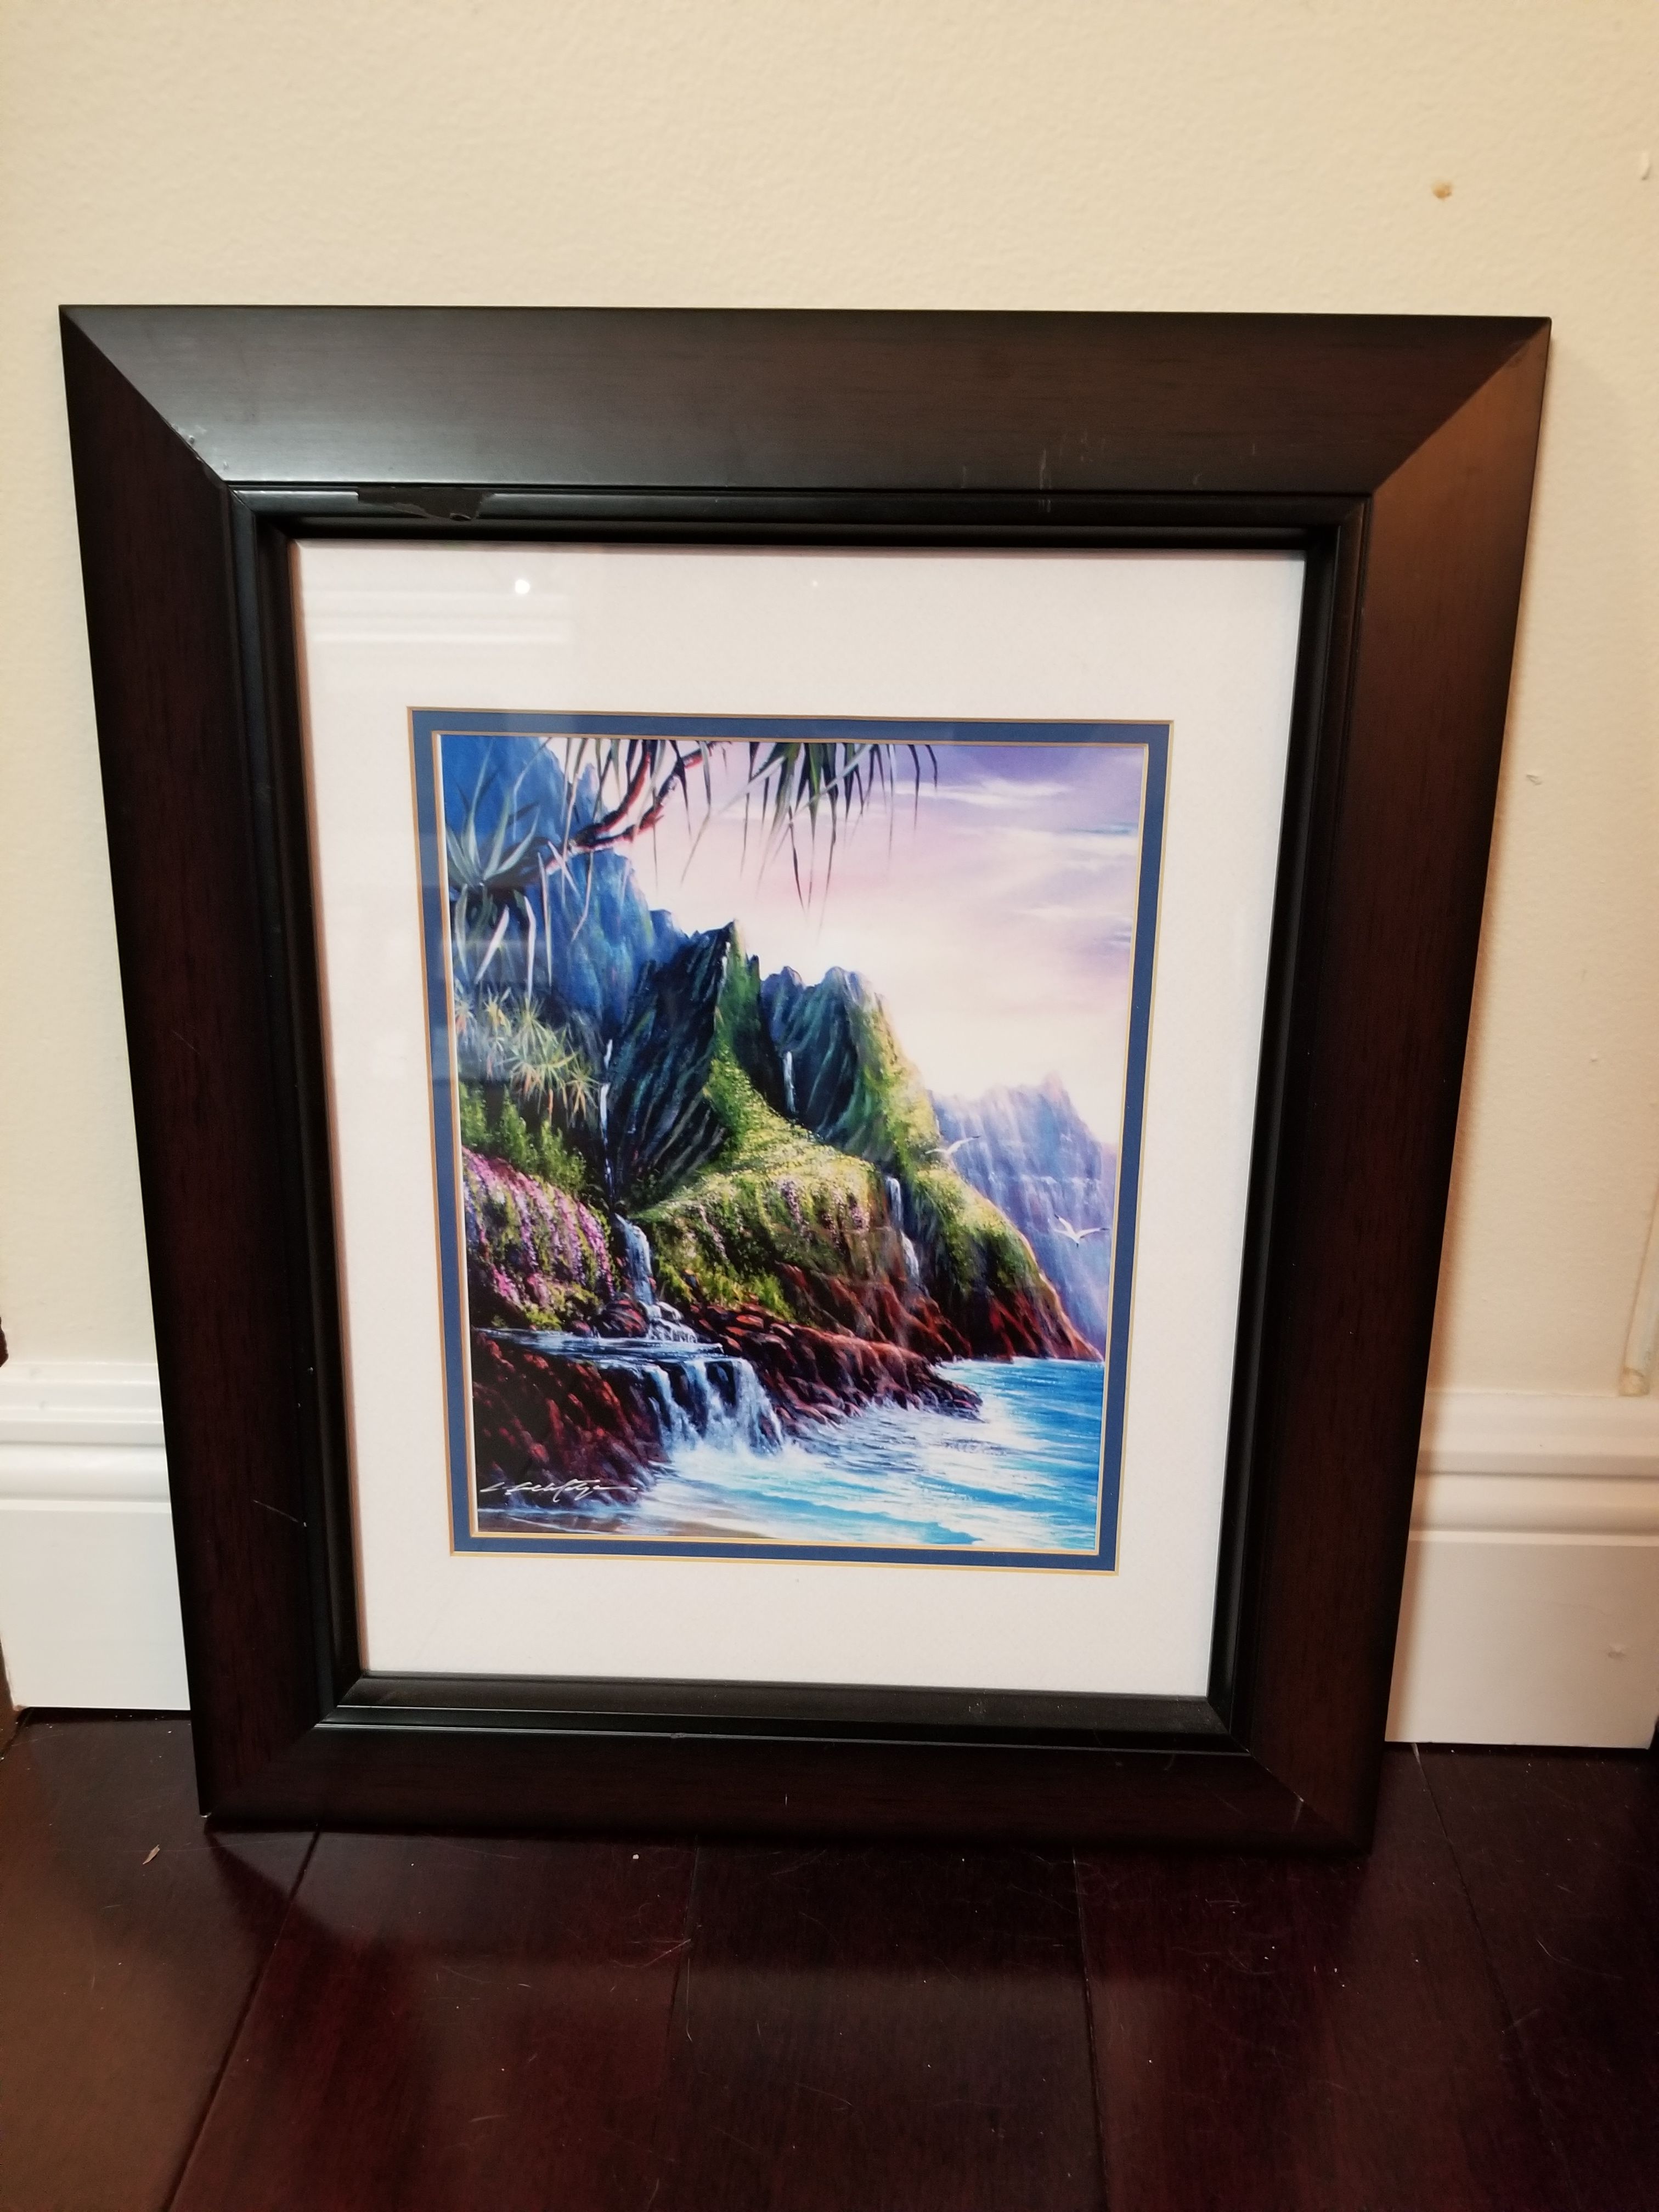 Framed signed Napali Romance Hawaii painting 15" x 18"